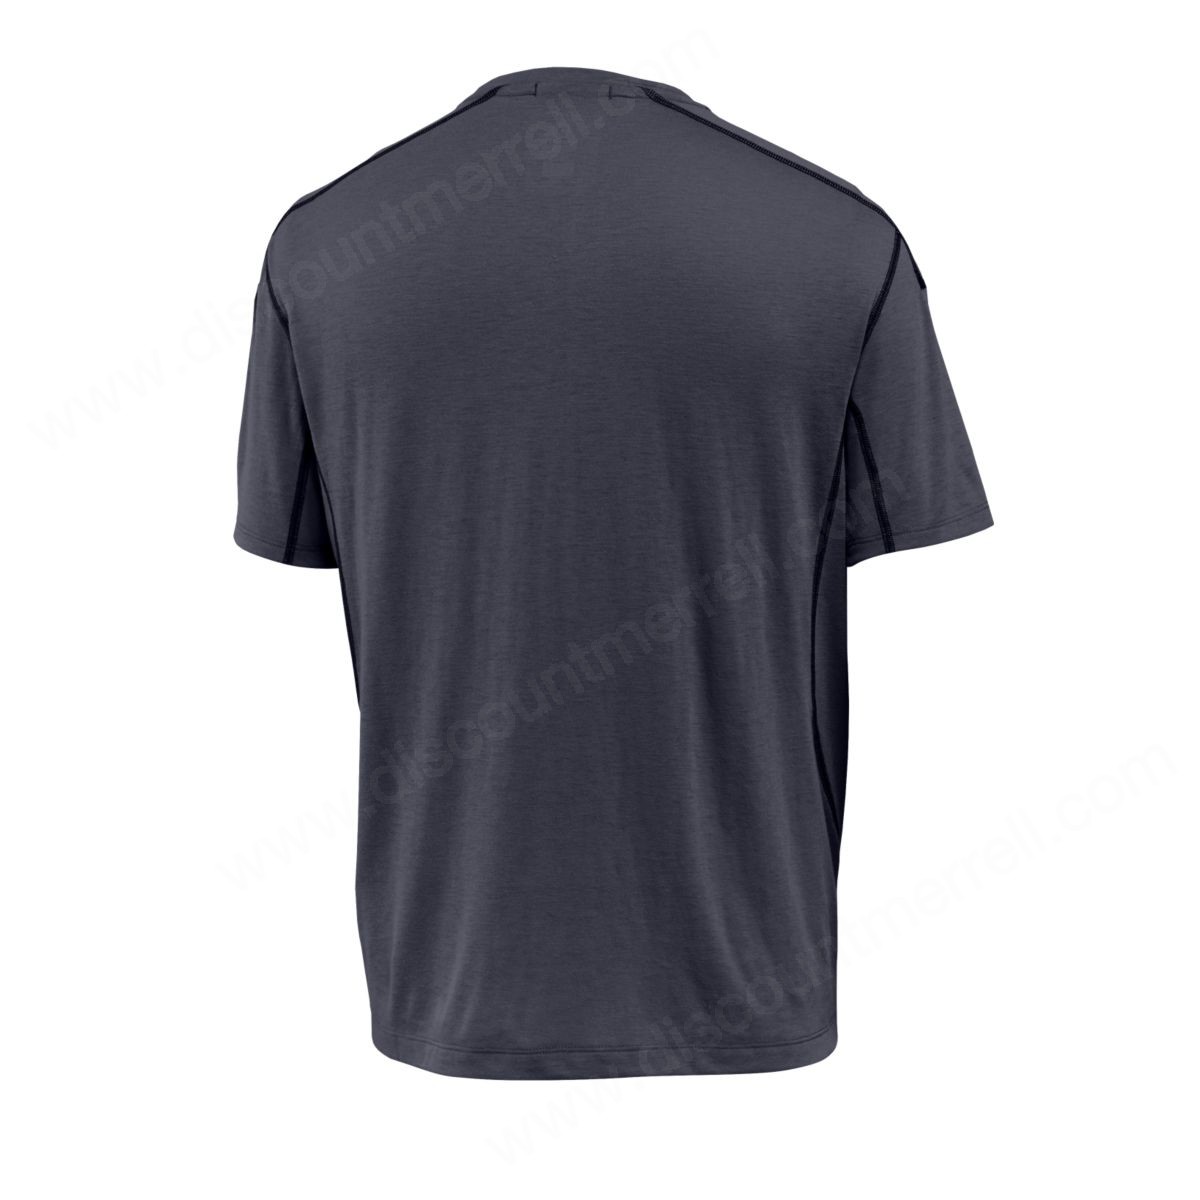 Merrell Mens's Paradox Short Sleeve Tech Shirts With Drirelease® Fabric Black - -1